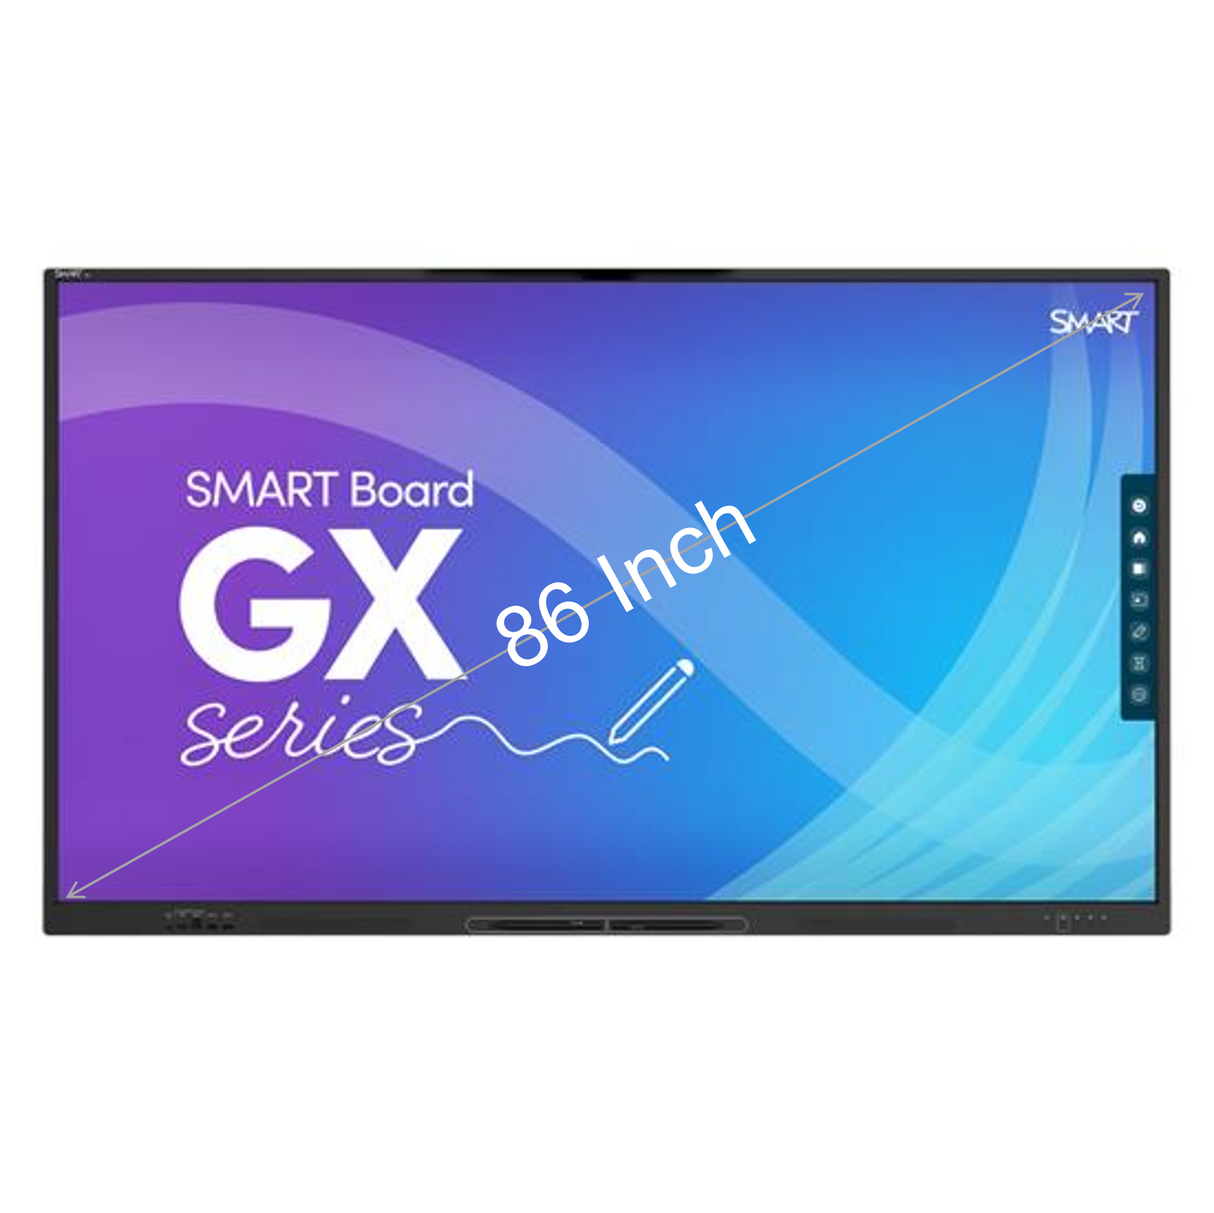 86" SMART Board GX (V2) SBID-GX186-V2